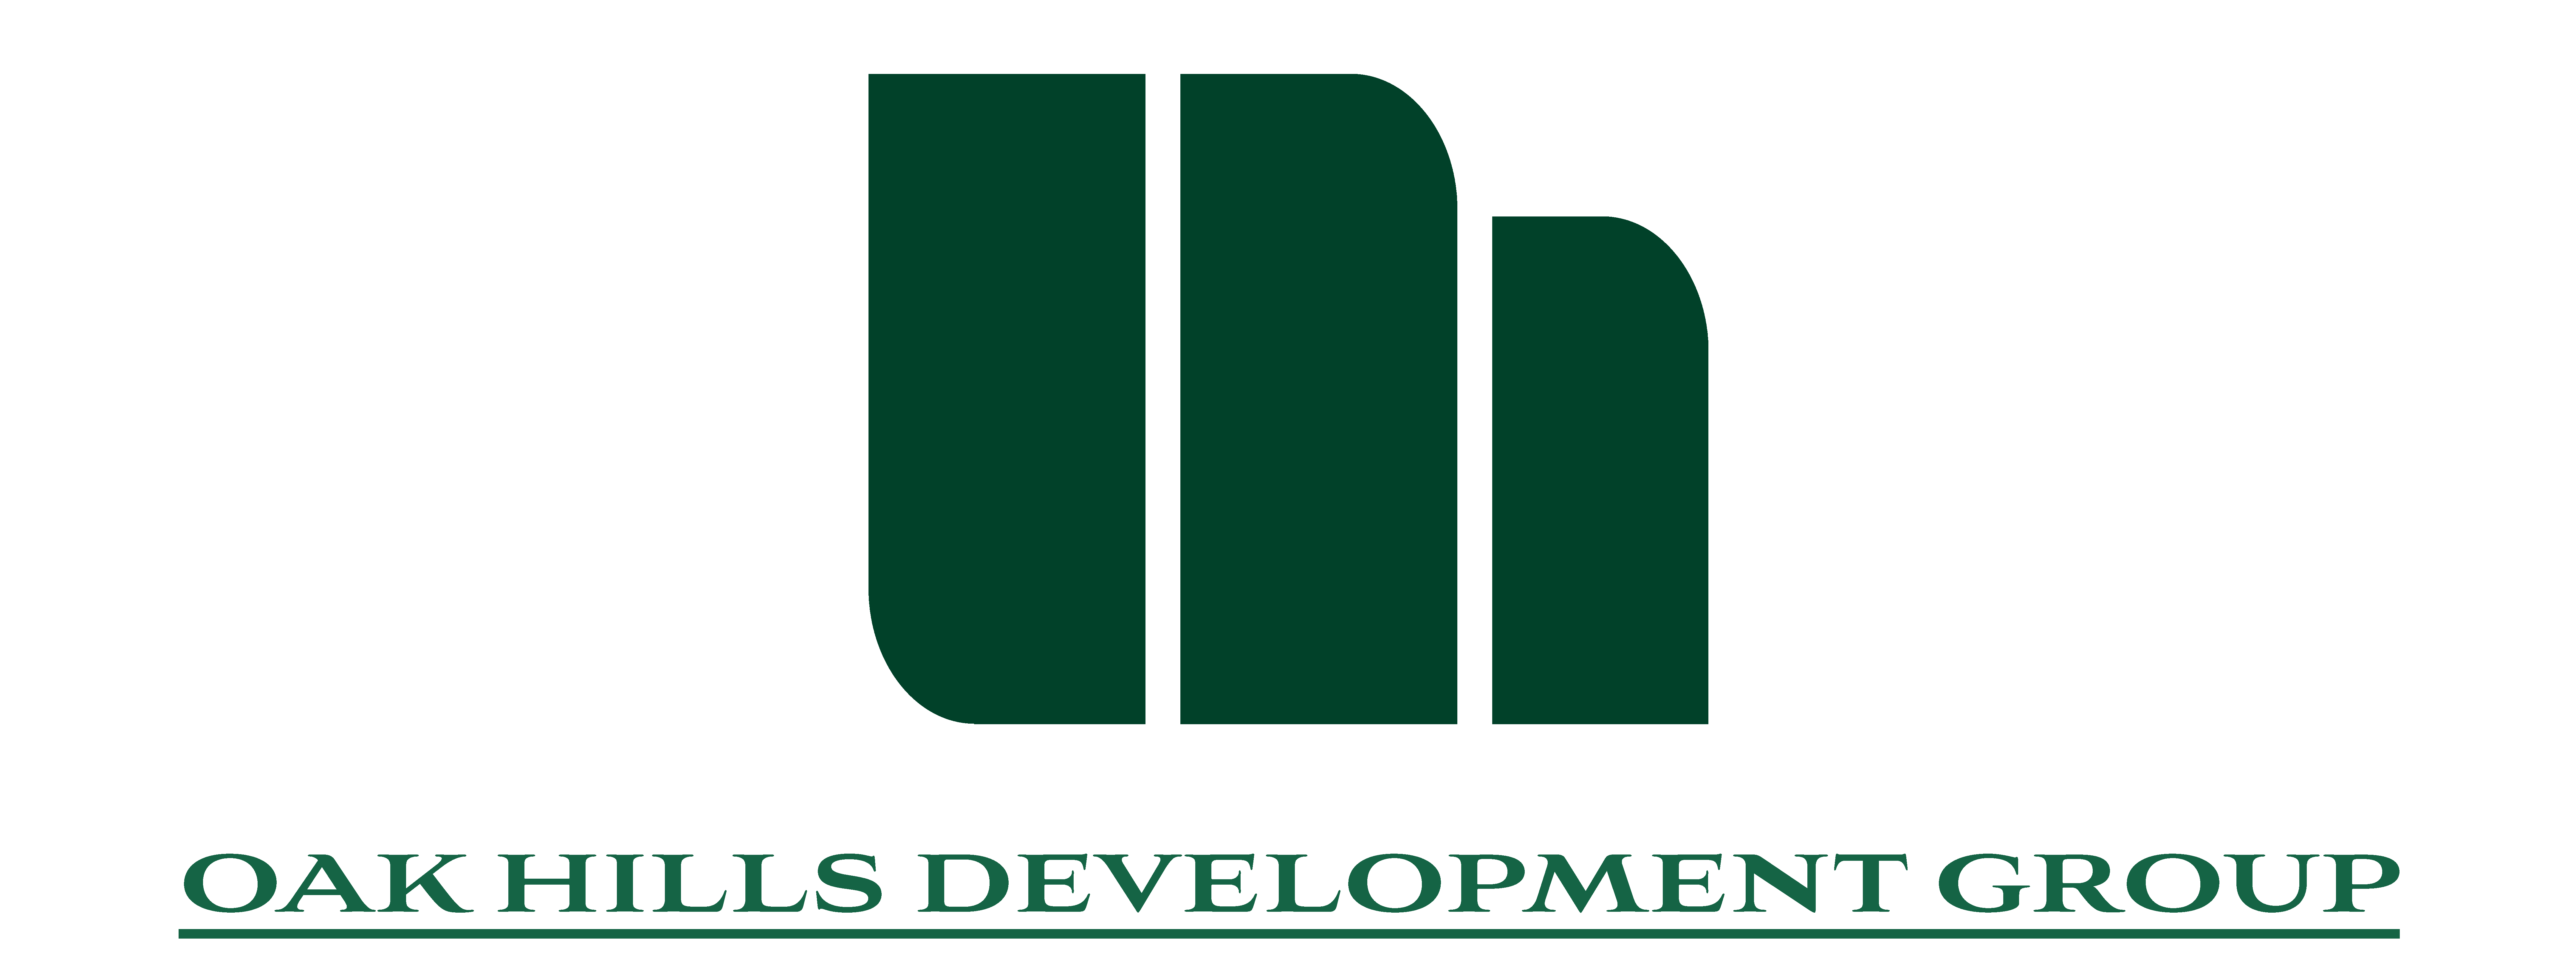 Oak Hills Development Group company logo